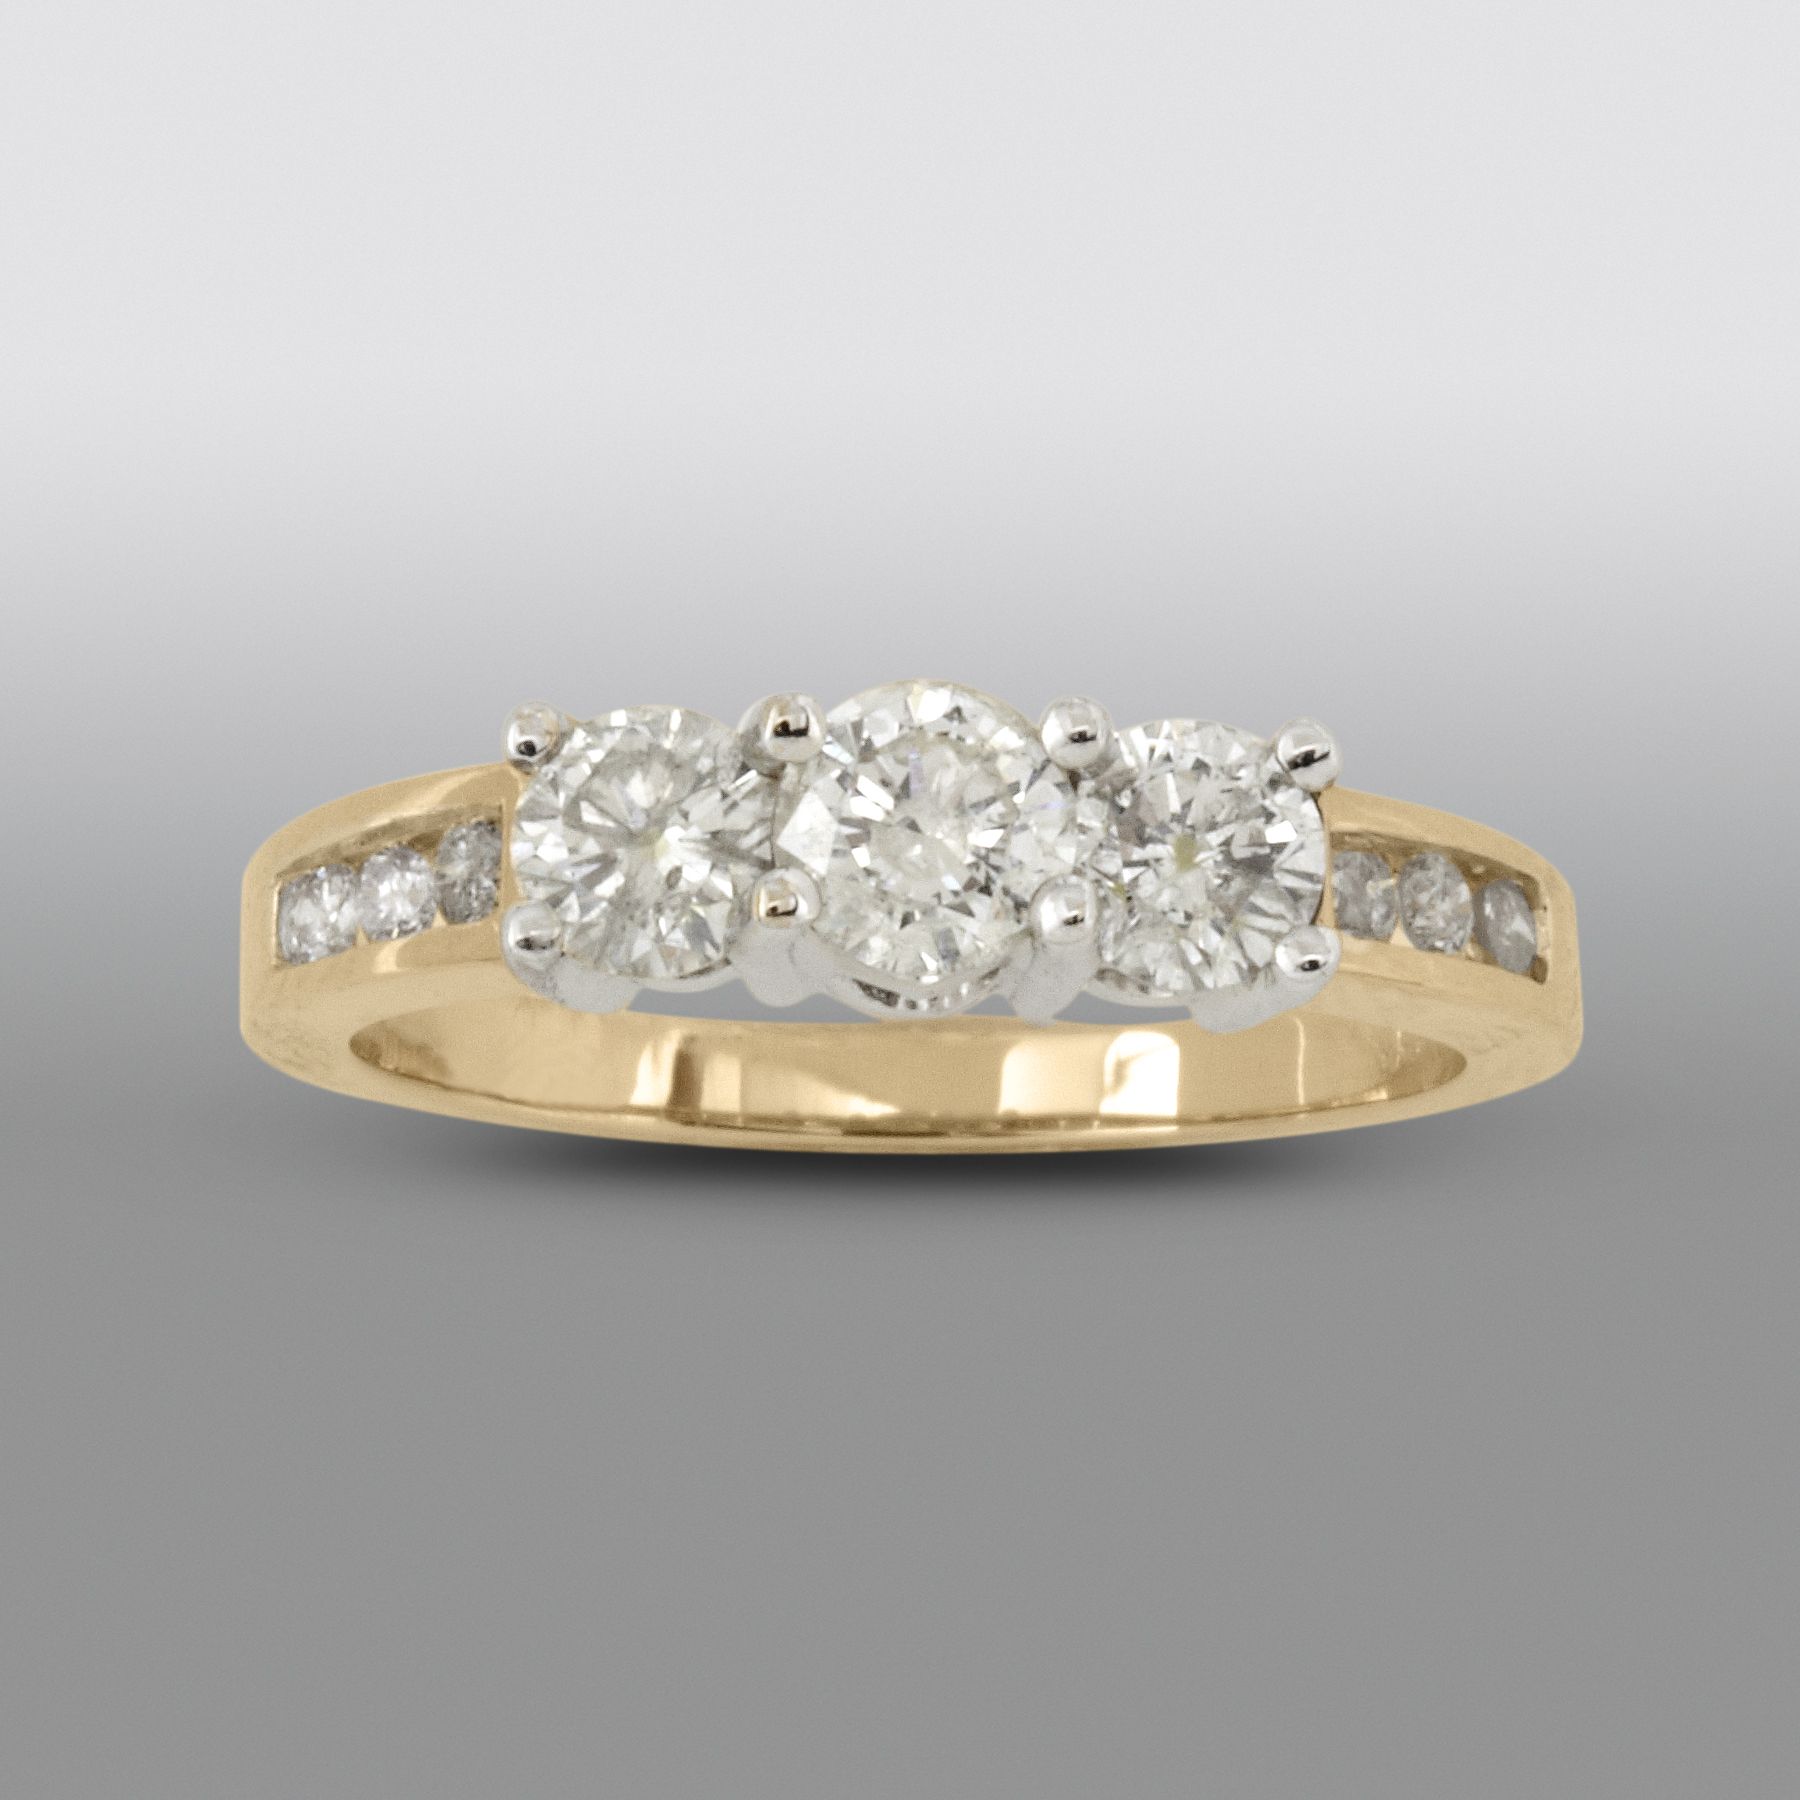 1Cttw. Round Diamond 3-Stone Plus Ring in 14k Yellow Gold